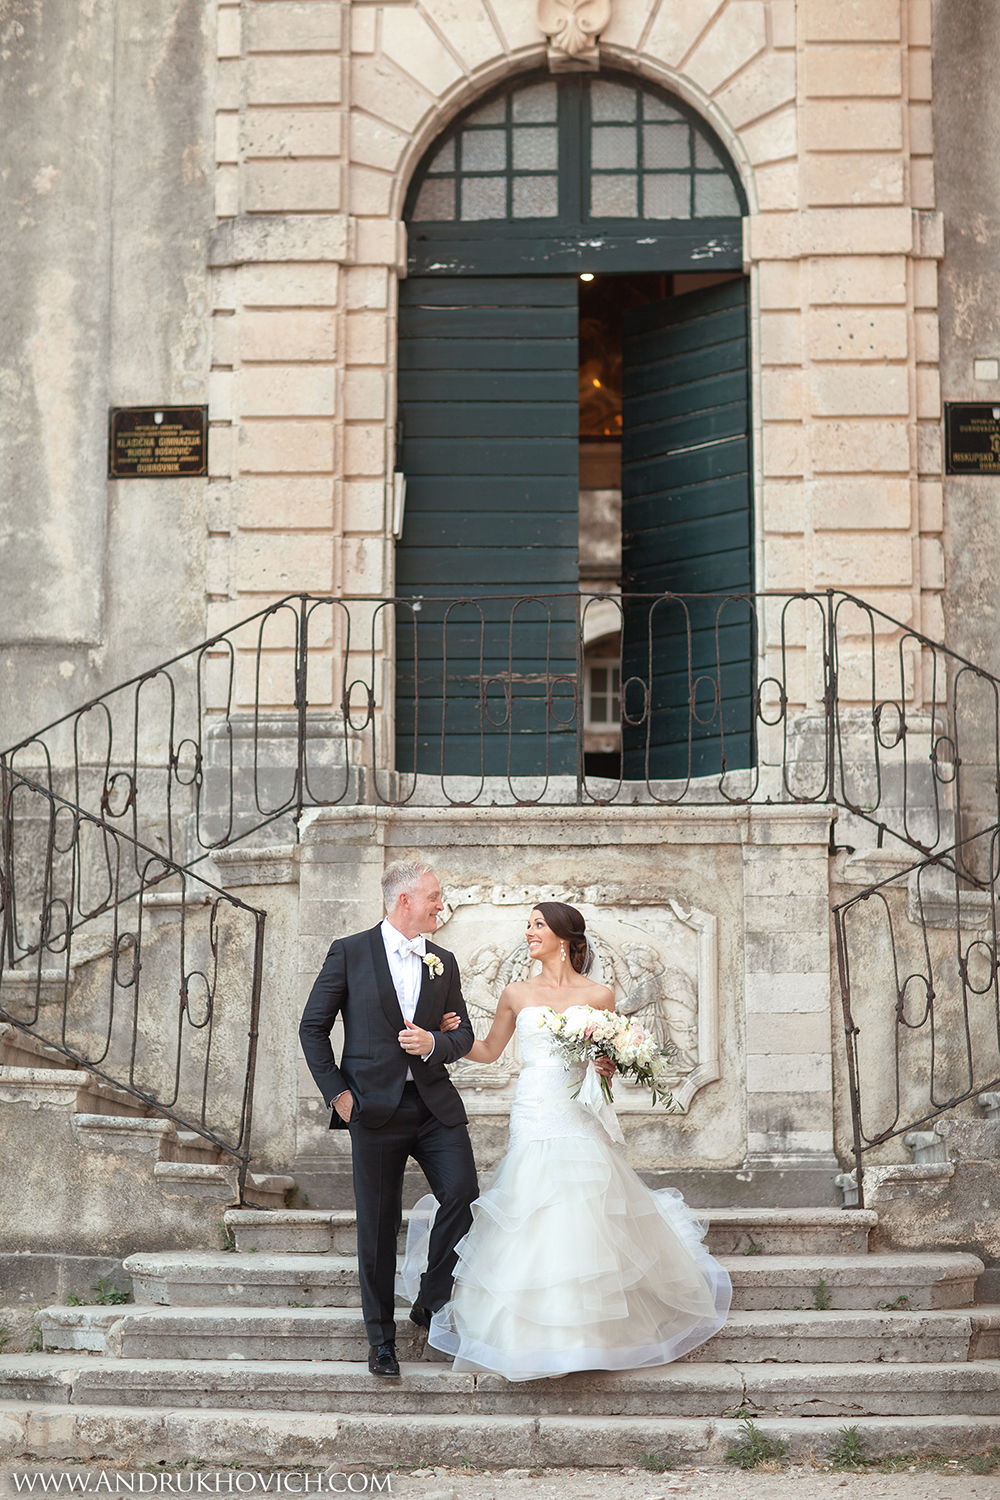 Dubrovnik_Croatia_Wedding_D&D_Photographer_Philip_Andrukhovich_24